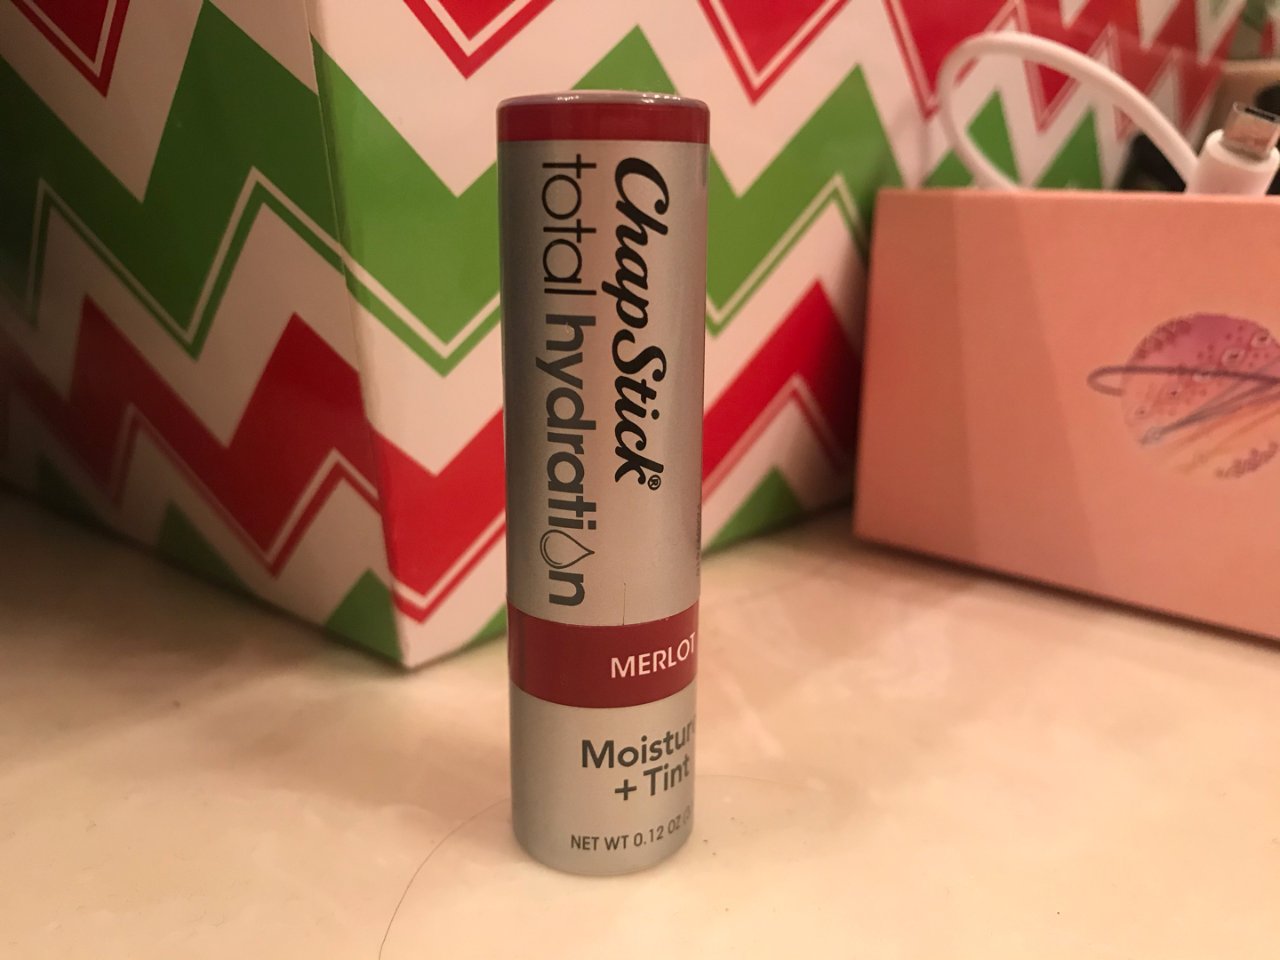 ChapStick Total Hydration Moisture + Tint Merlot Tinted Lip Balm Tube, Merlot Tinted ChapStick for Lip Care - 0.12 Oz: Health & Personal Care